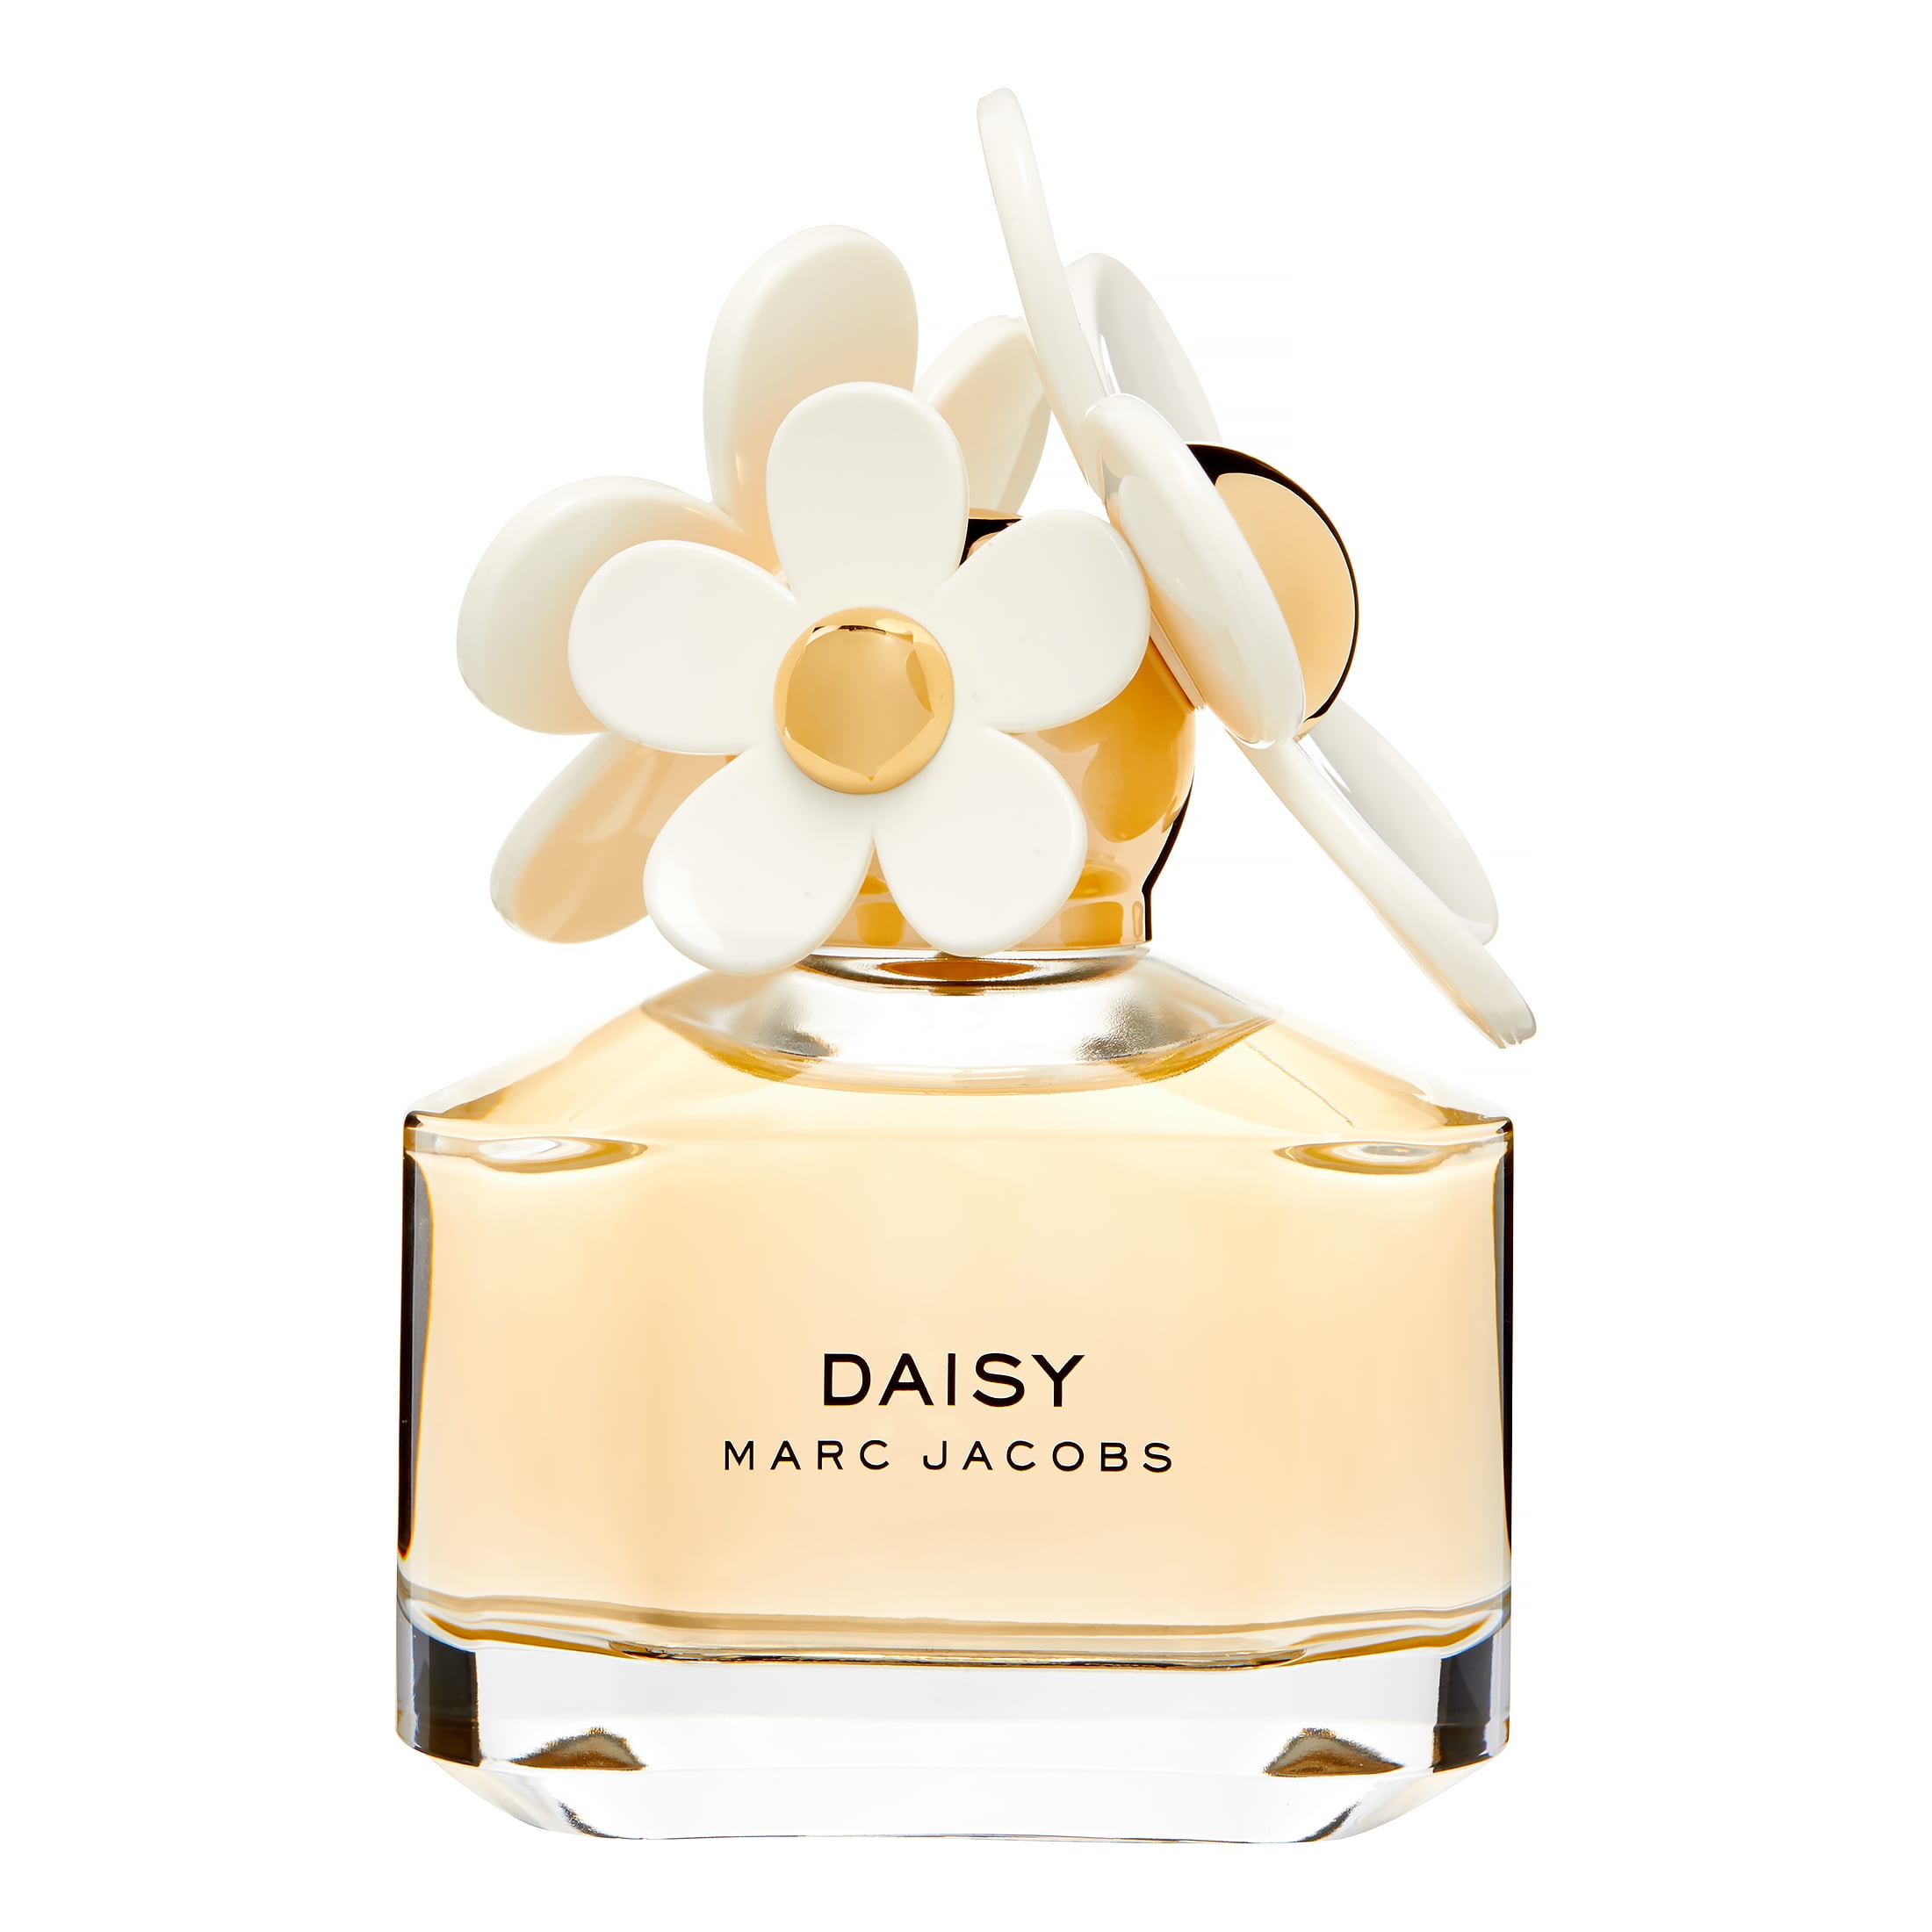 Jacobs Daisy Eau De Toilette, Perfume Women, 1.7 Oz - Walmart.com